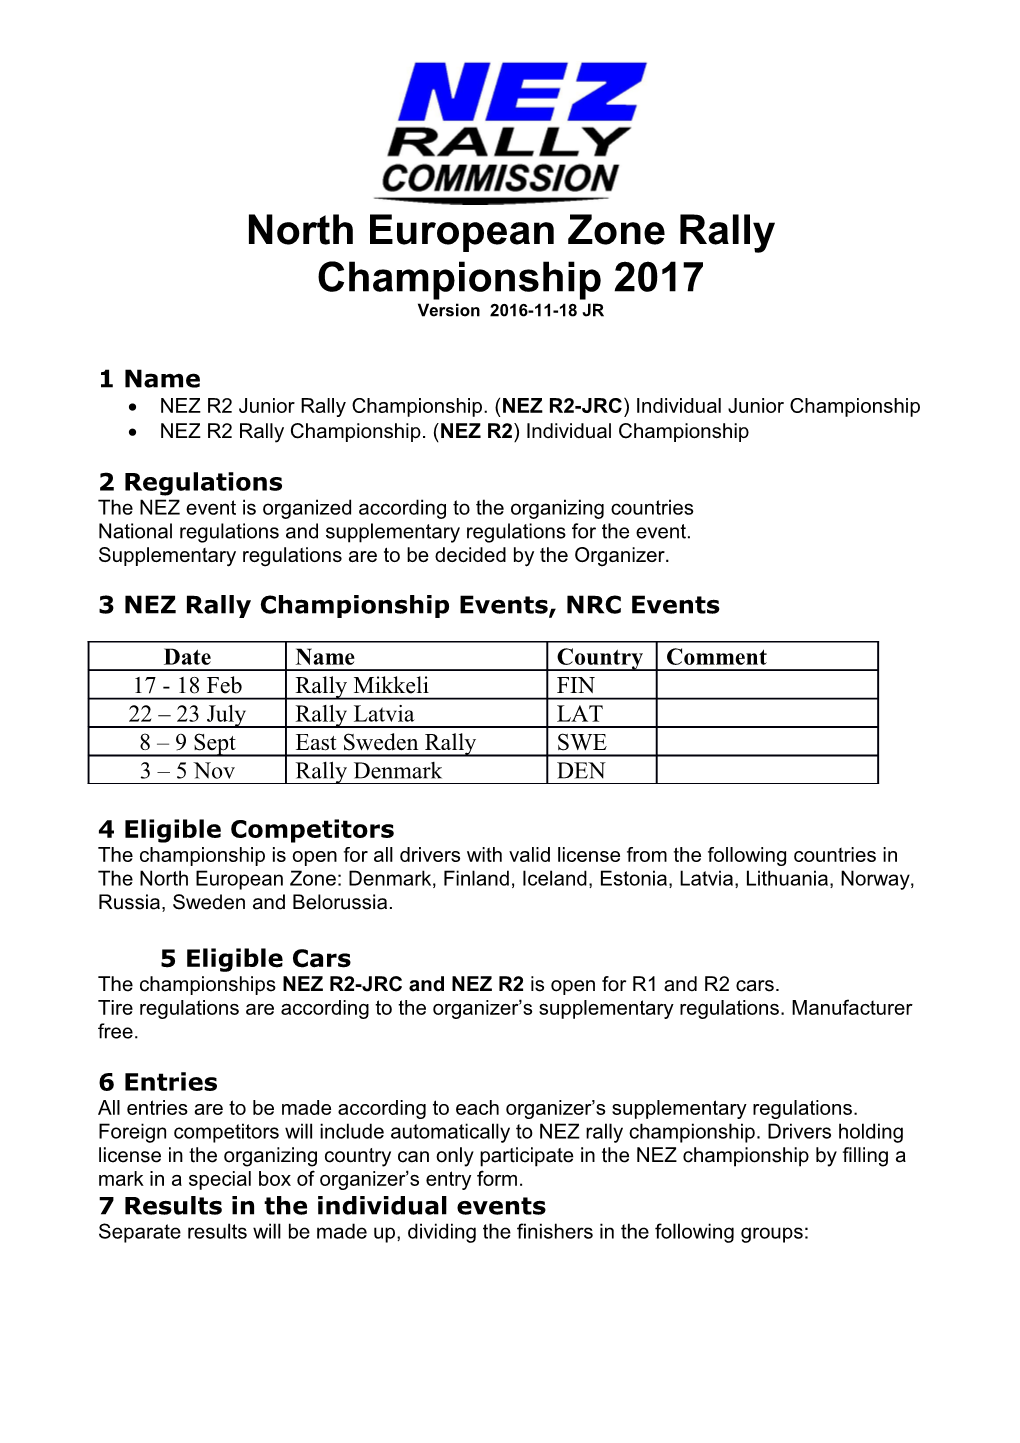 North European Zone Rally Championship 2017